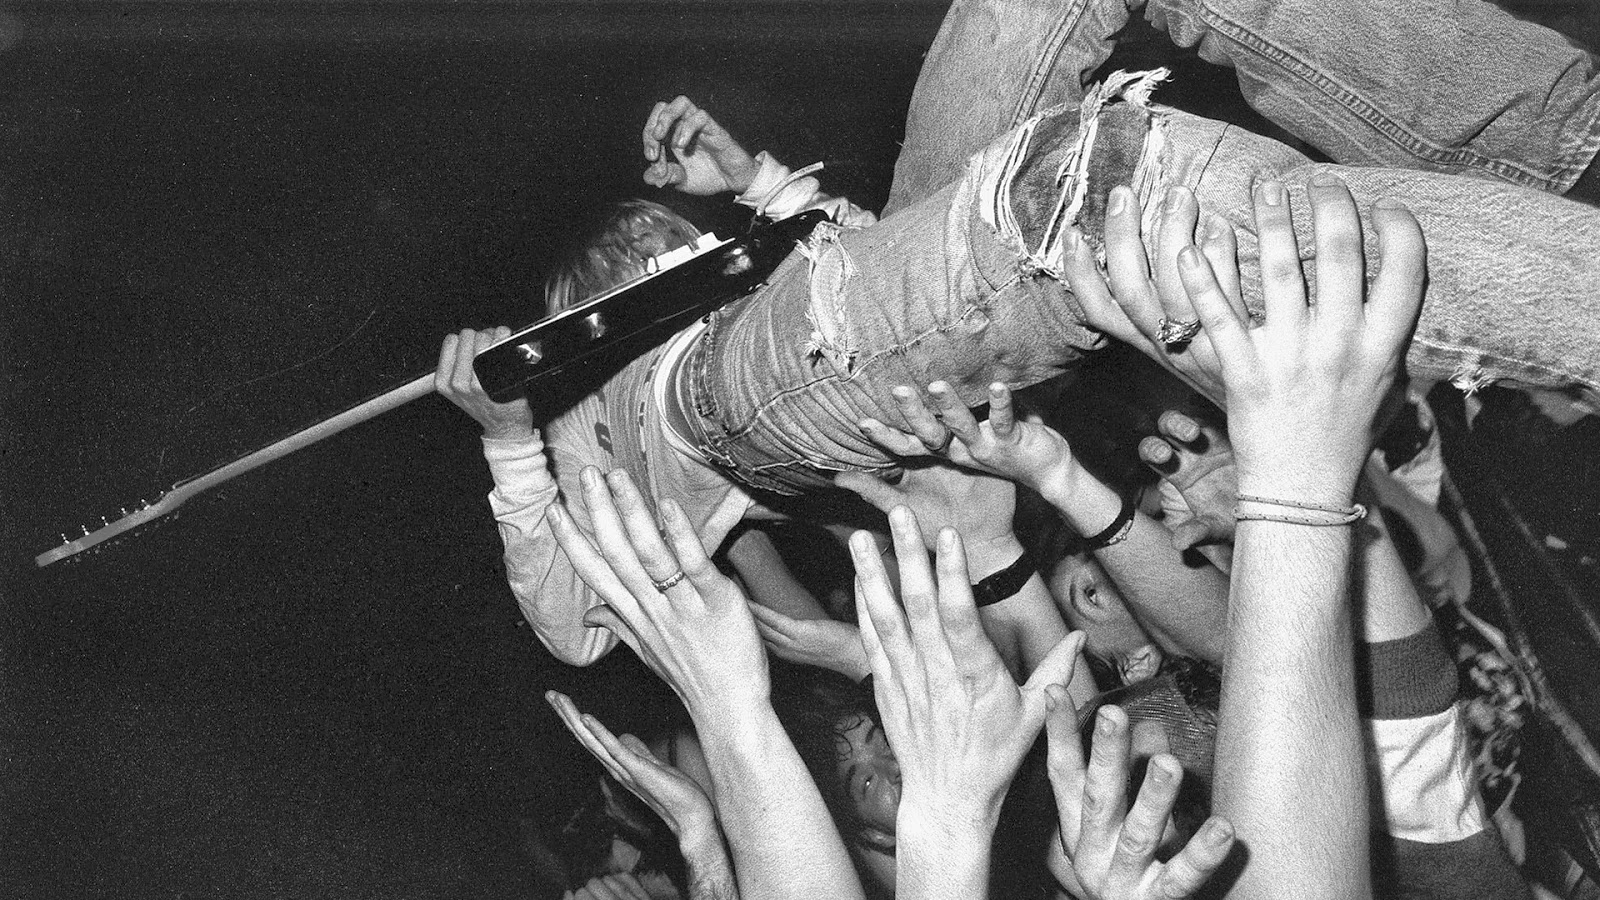 Kurt Cobain grunge mosh pit